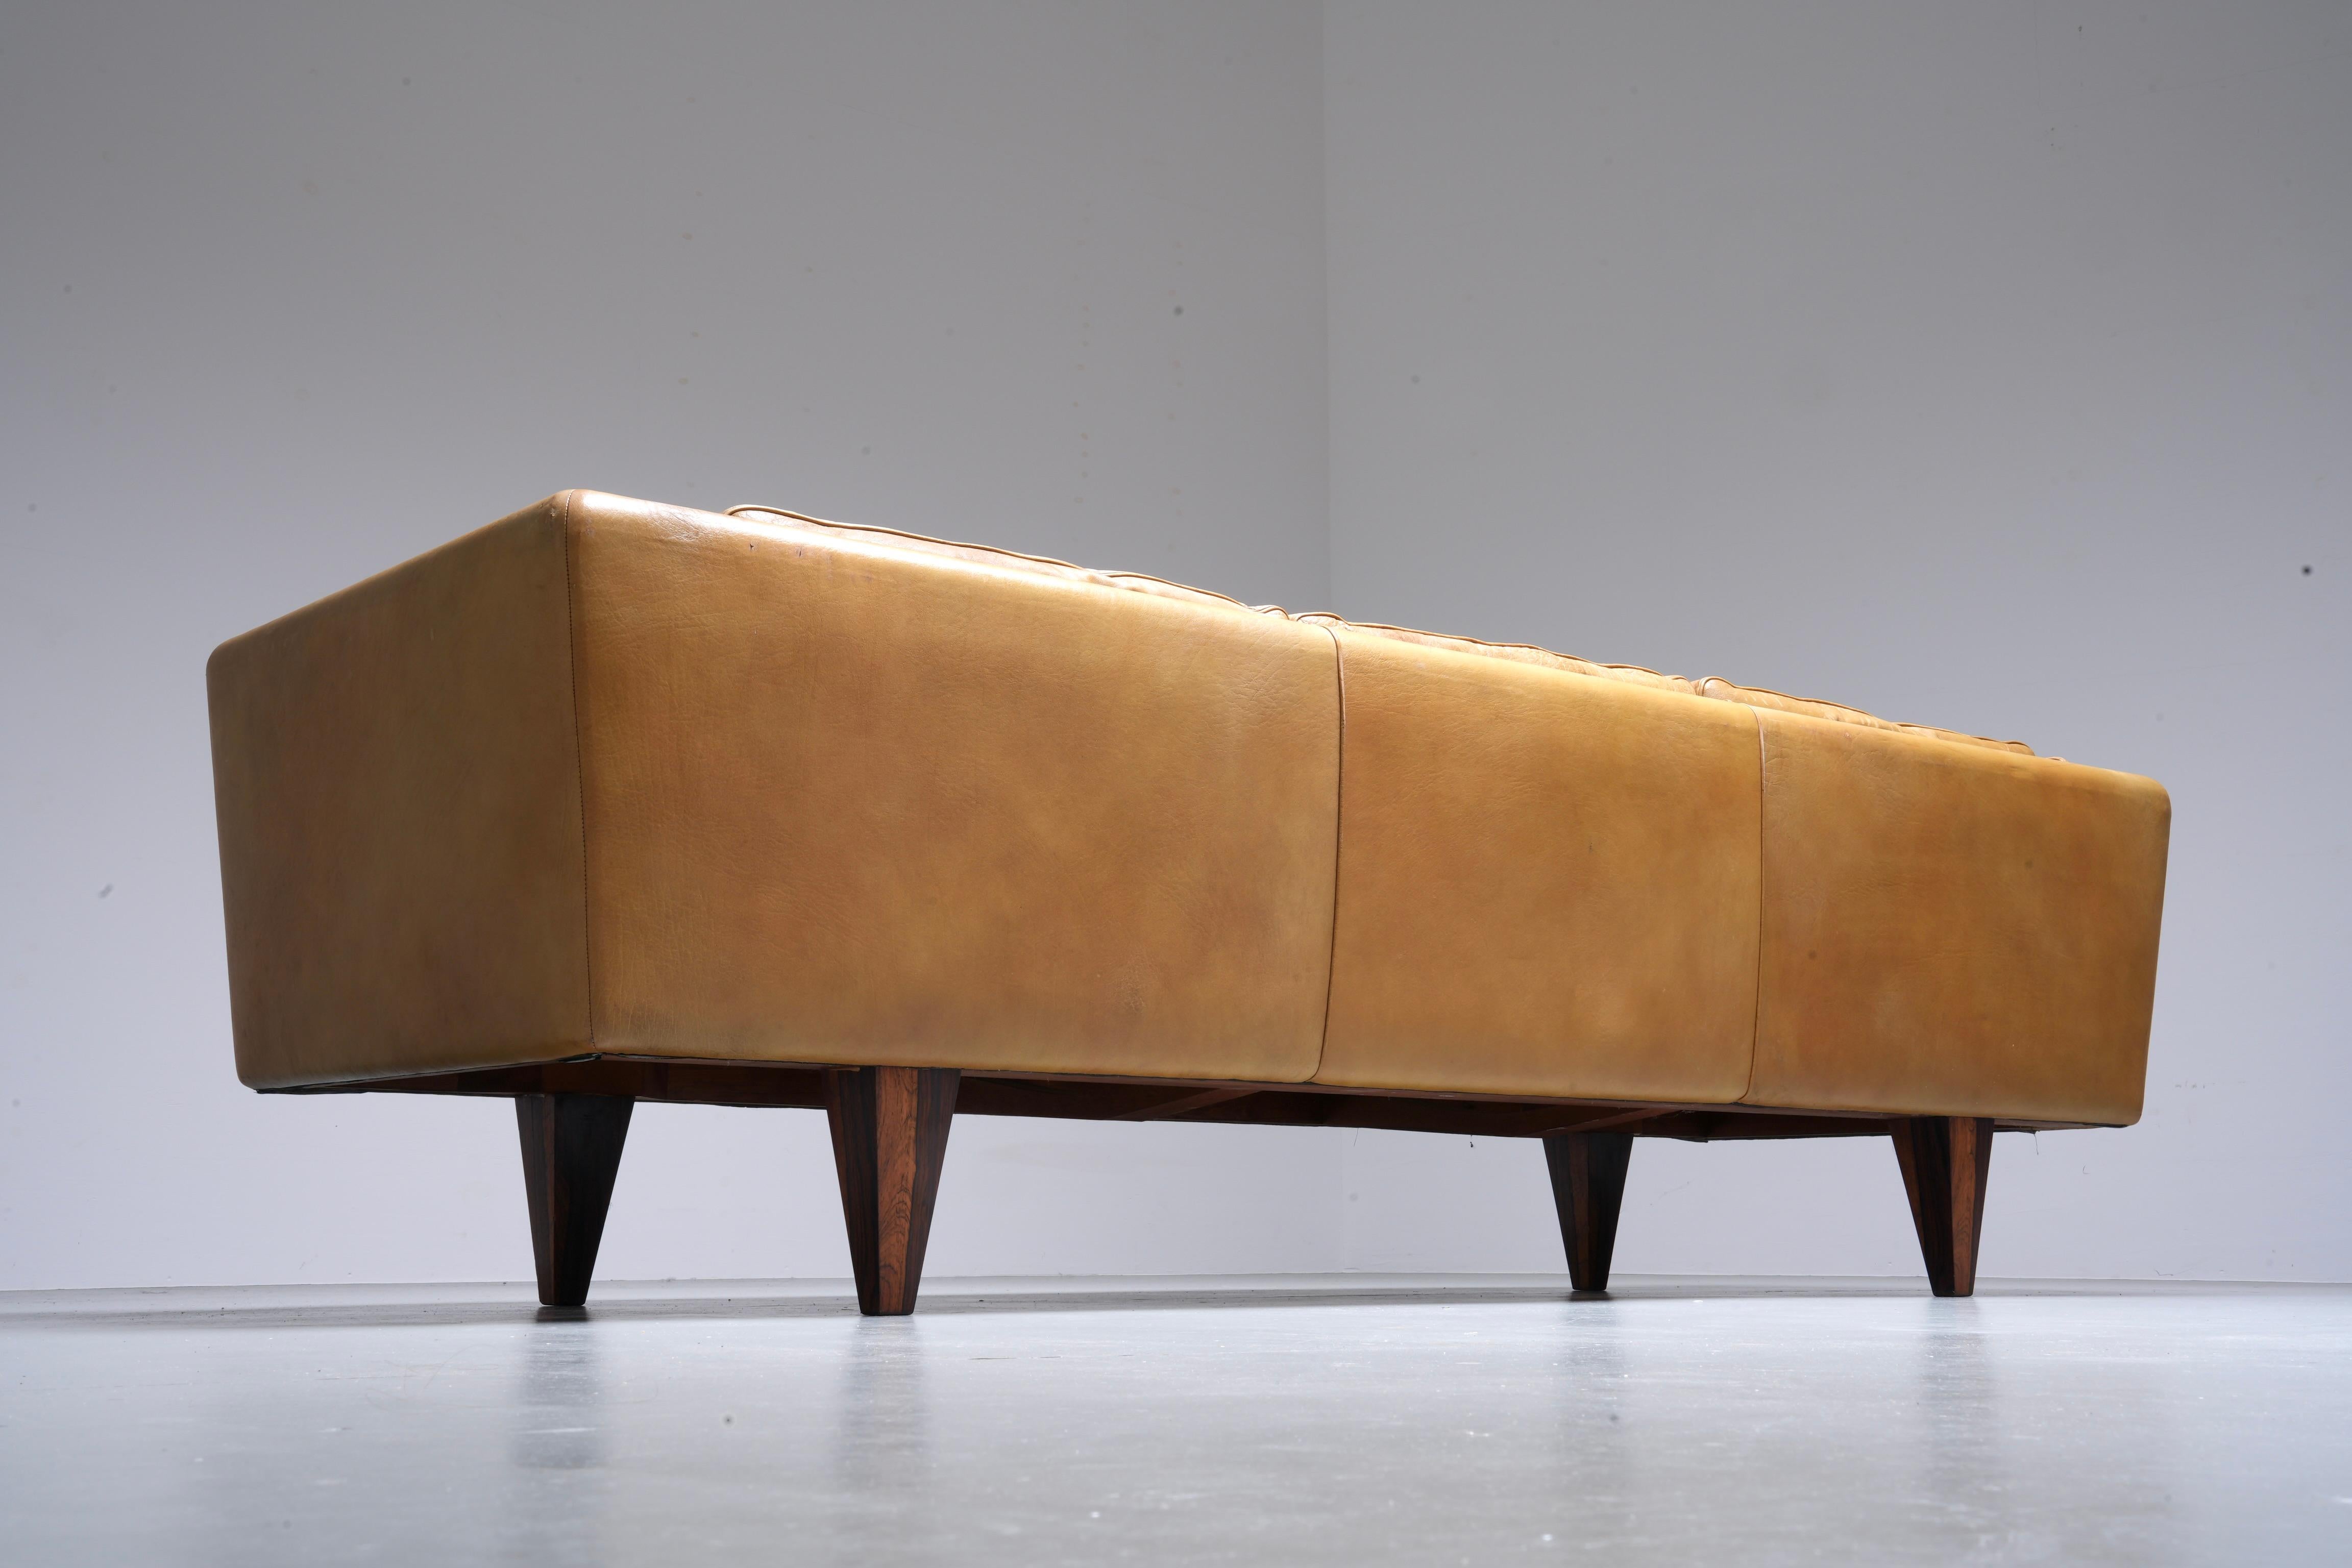 Illum Wikkelsø Dreisitziges Sofa 'V11' aus cognacfarbenem Leder, Dänemark, 1960er Jahre (Dänisch) im Angebot